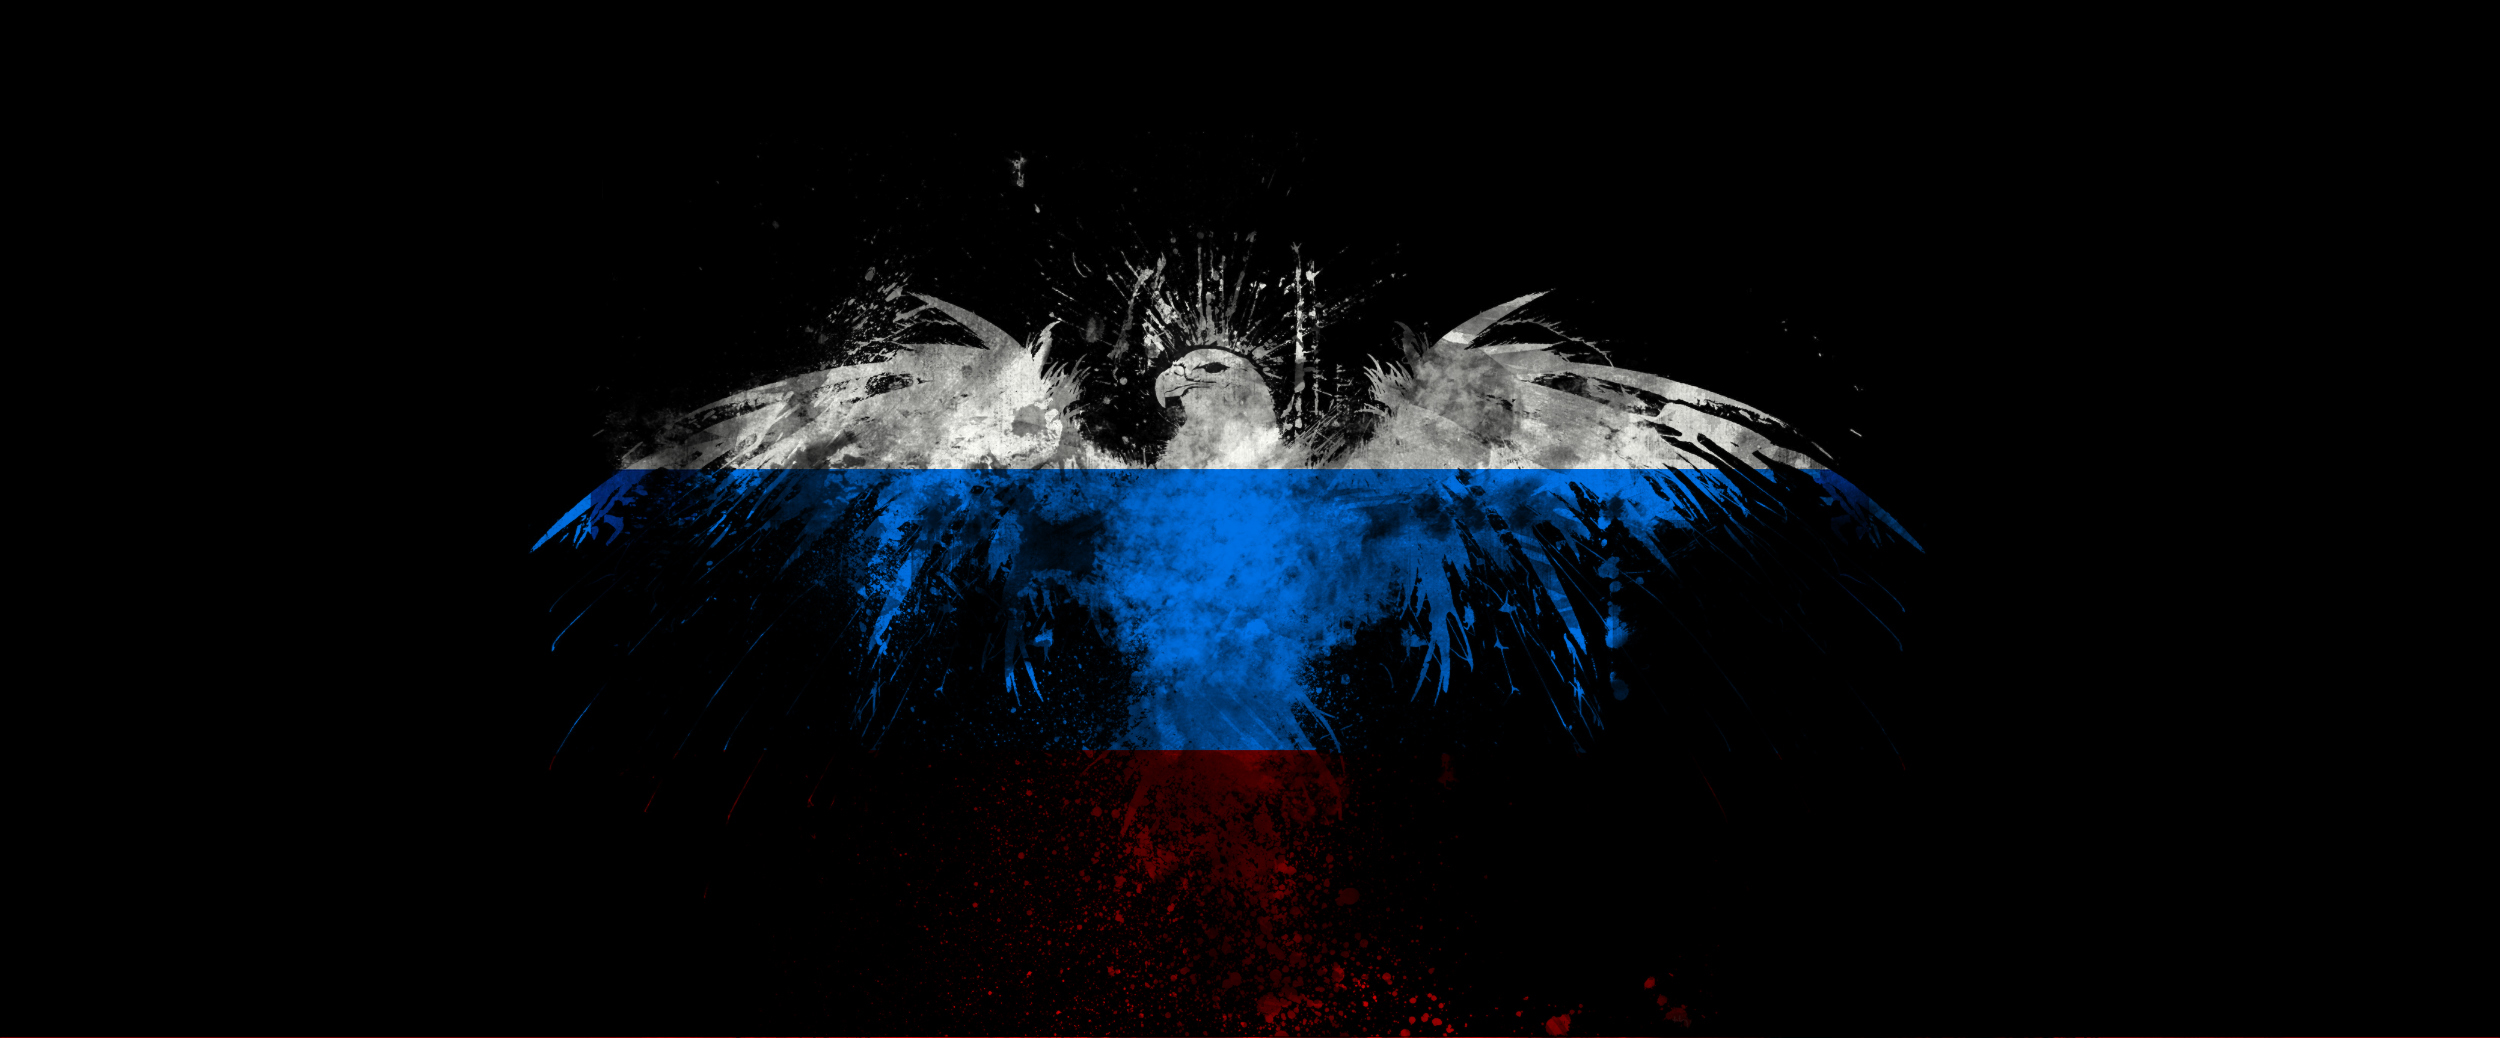 ава пабг с флагом россии фото 16